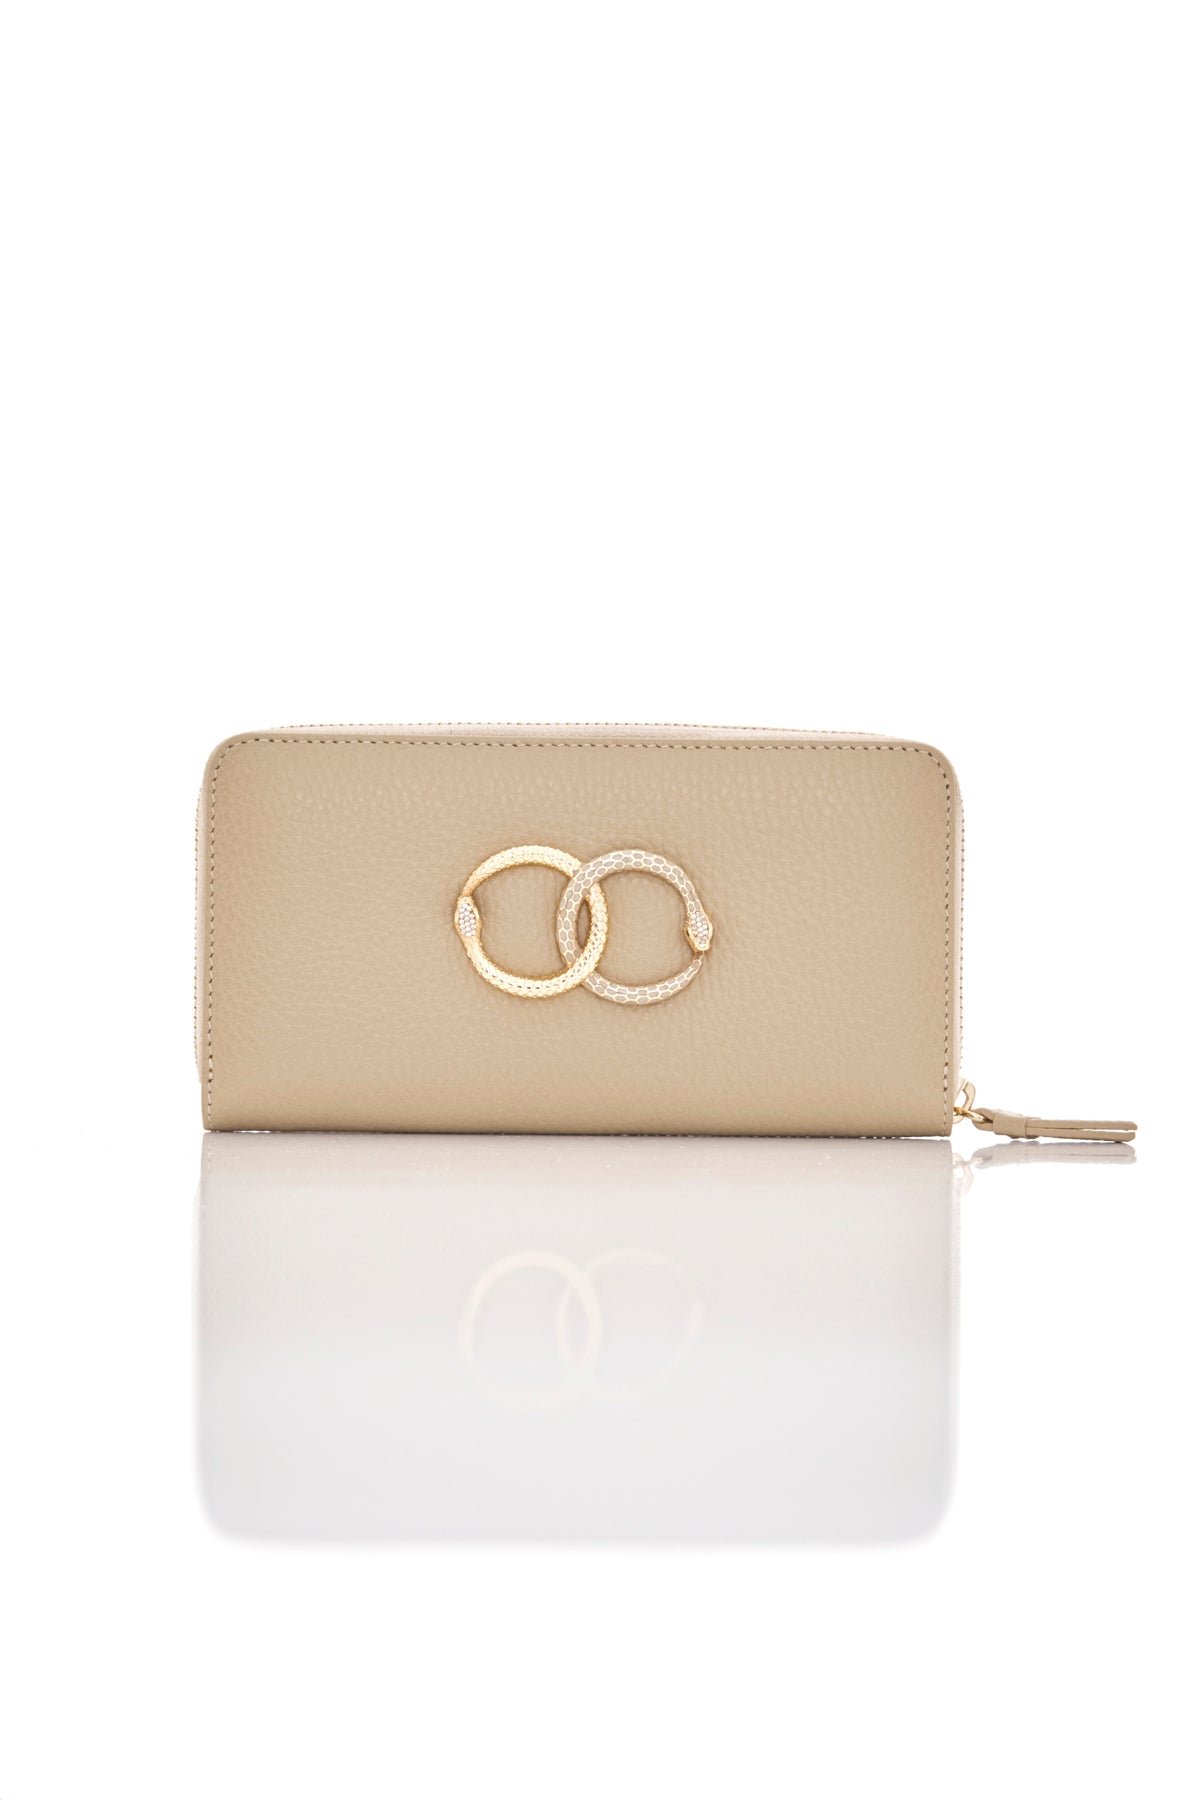 beige sand ouroboros genuine leather women's wallet front